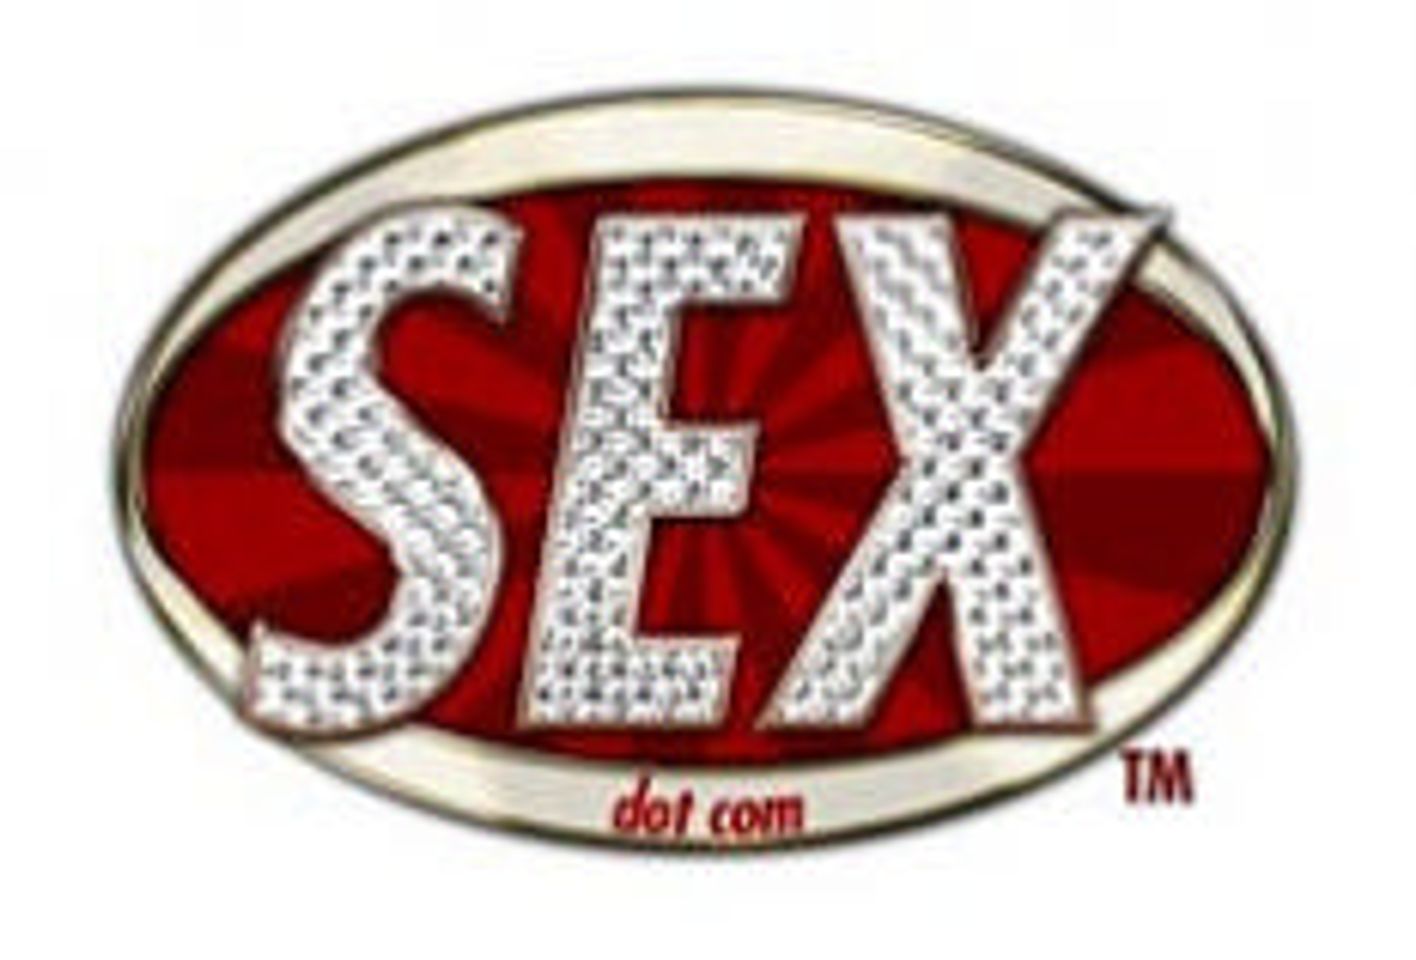 Sex.com Partners With Playboy